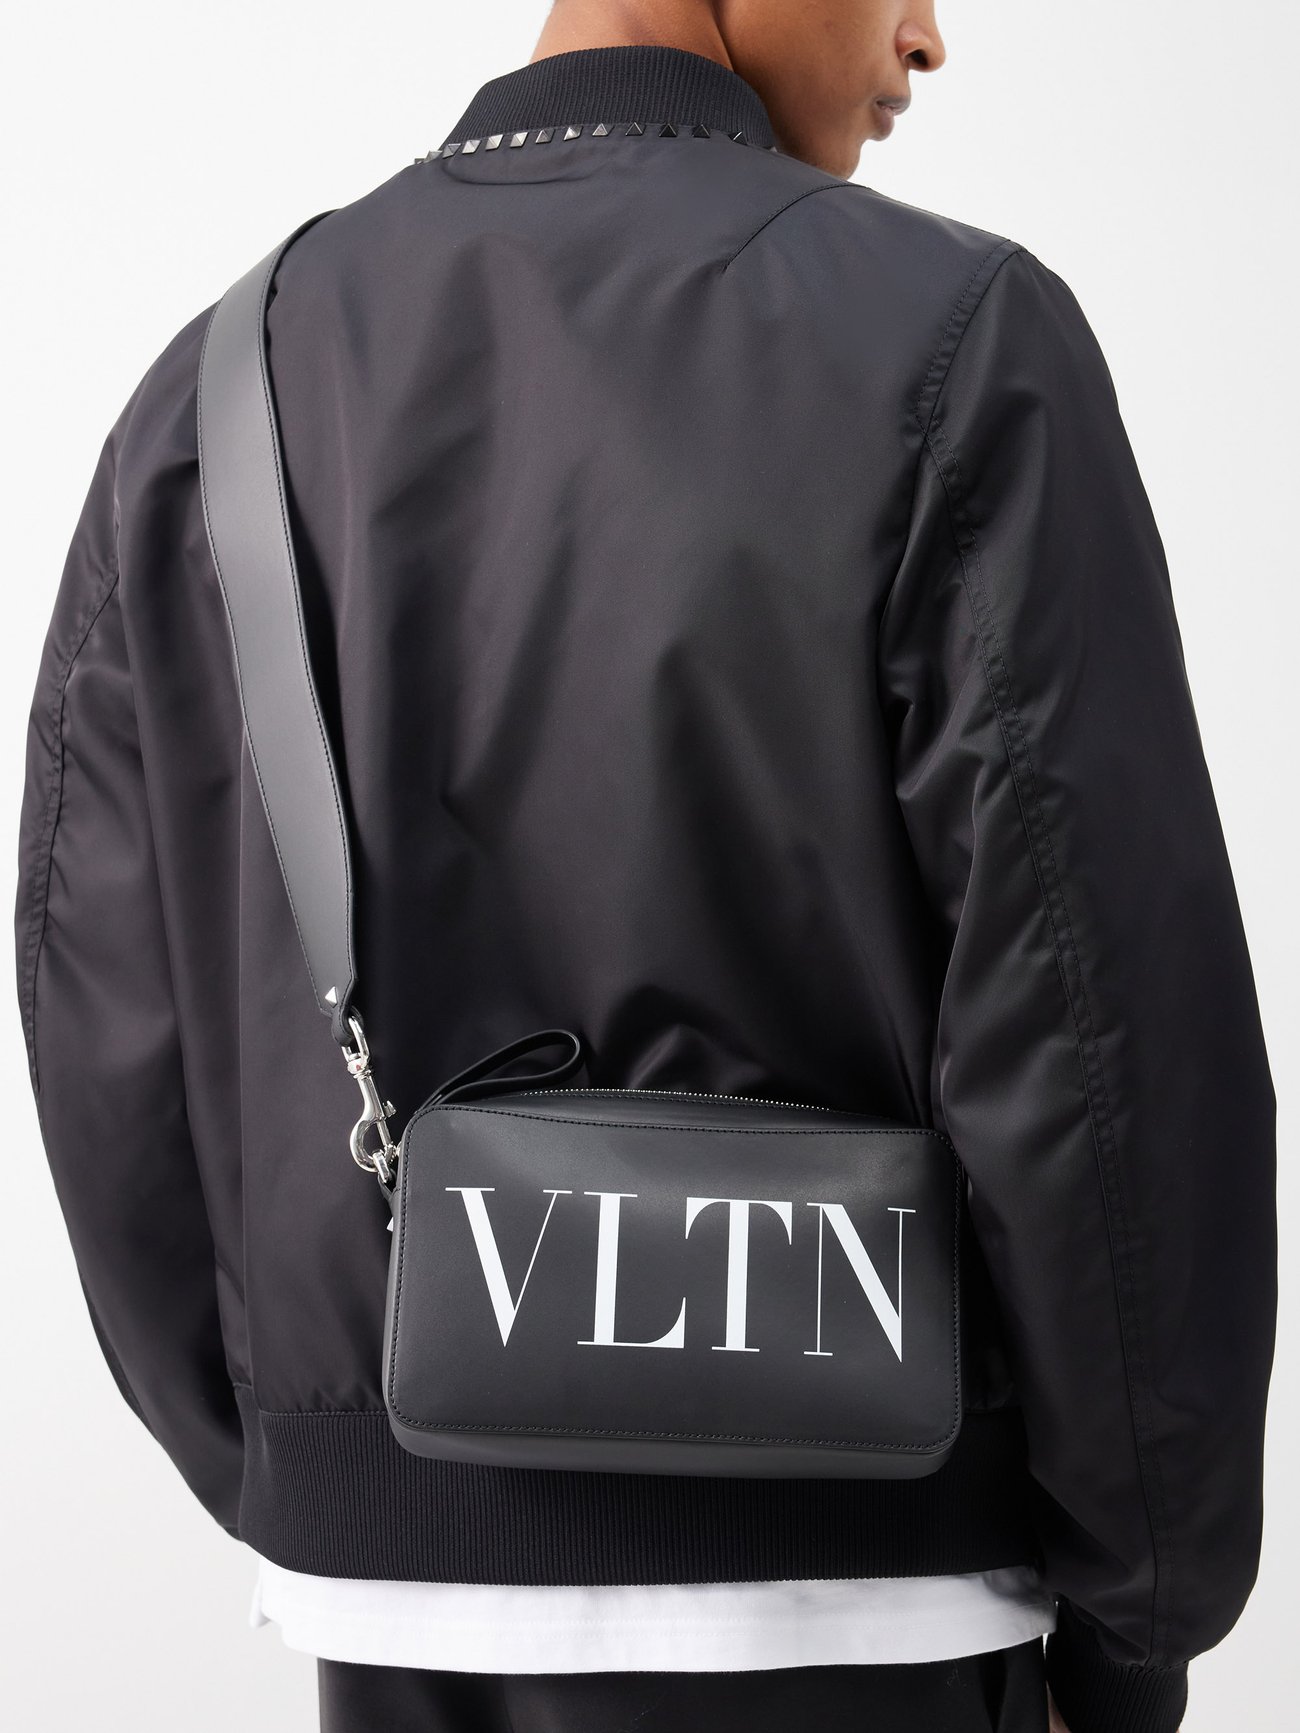 VLTN Leather Clutch